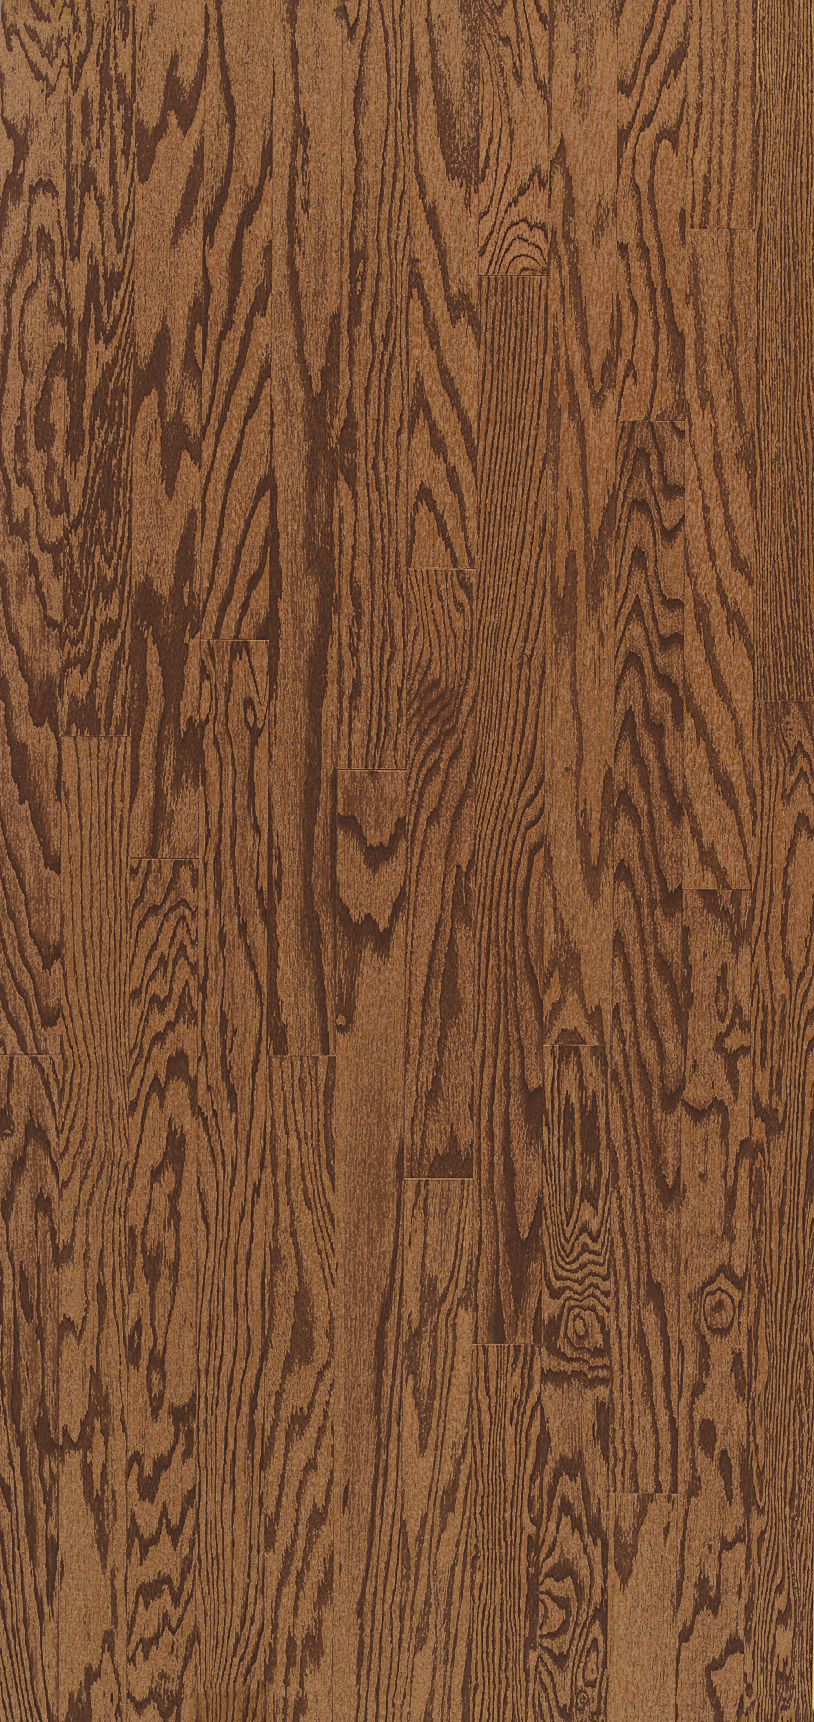 Saddle Oak 5" - Turlington Lock&Fold Collection - Engineered Hardwood Flooring by Bruce